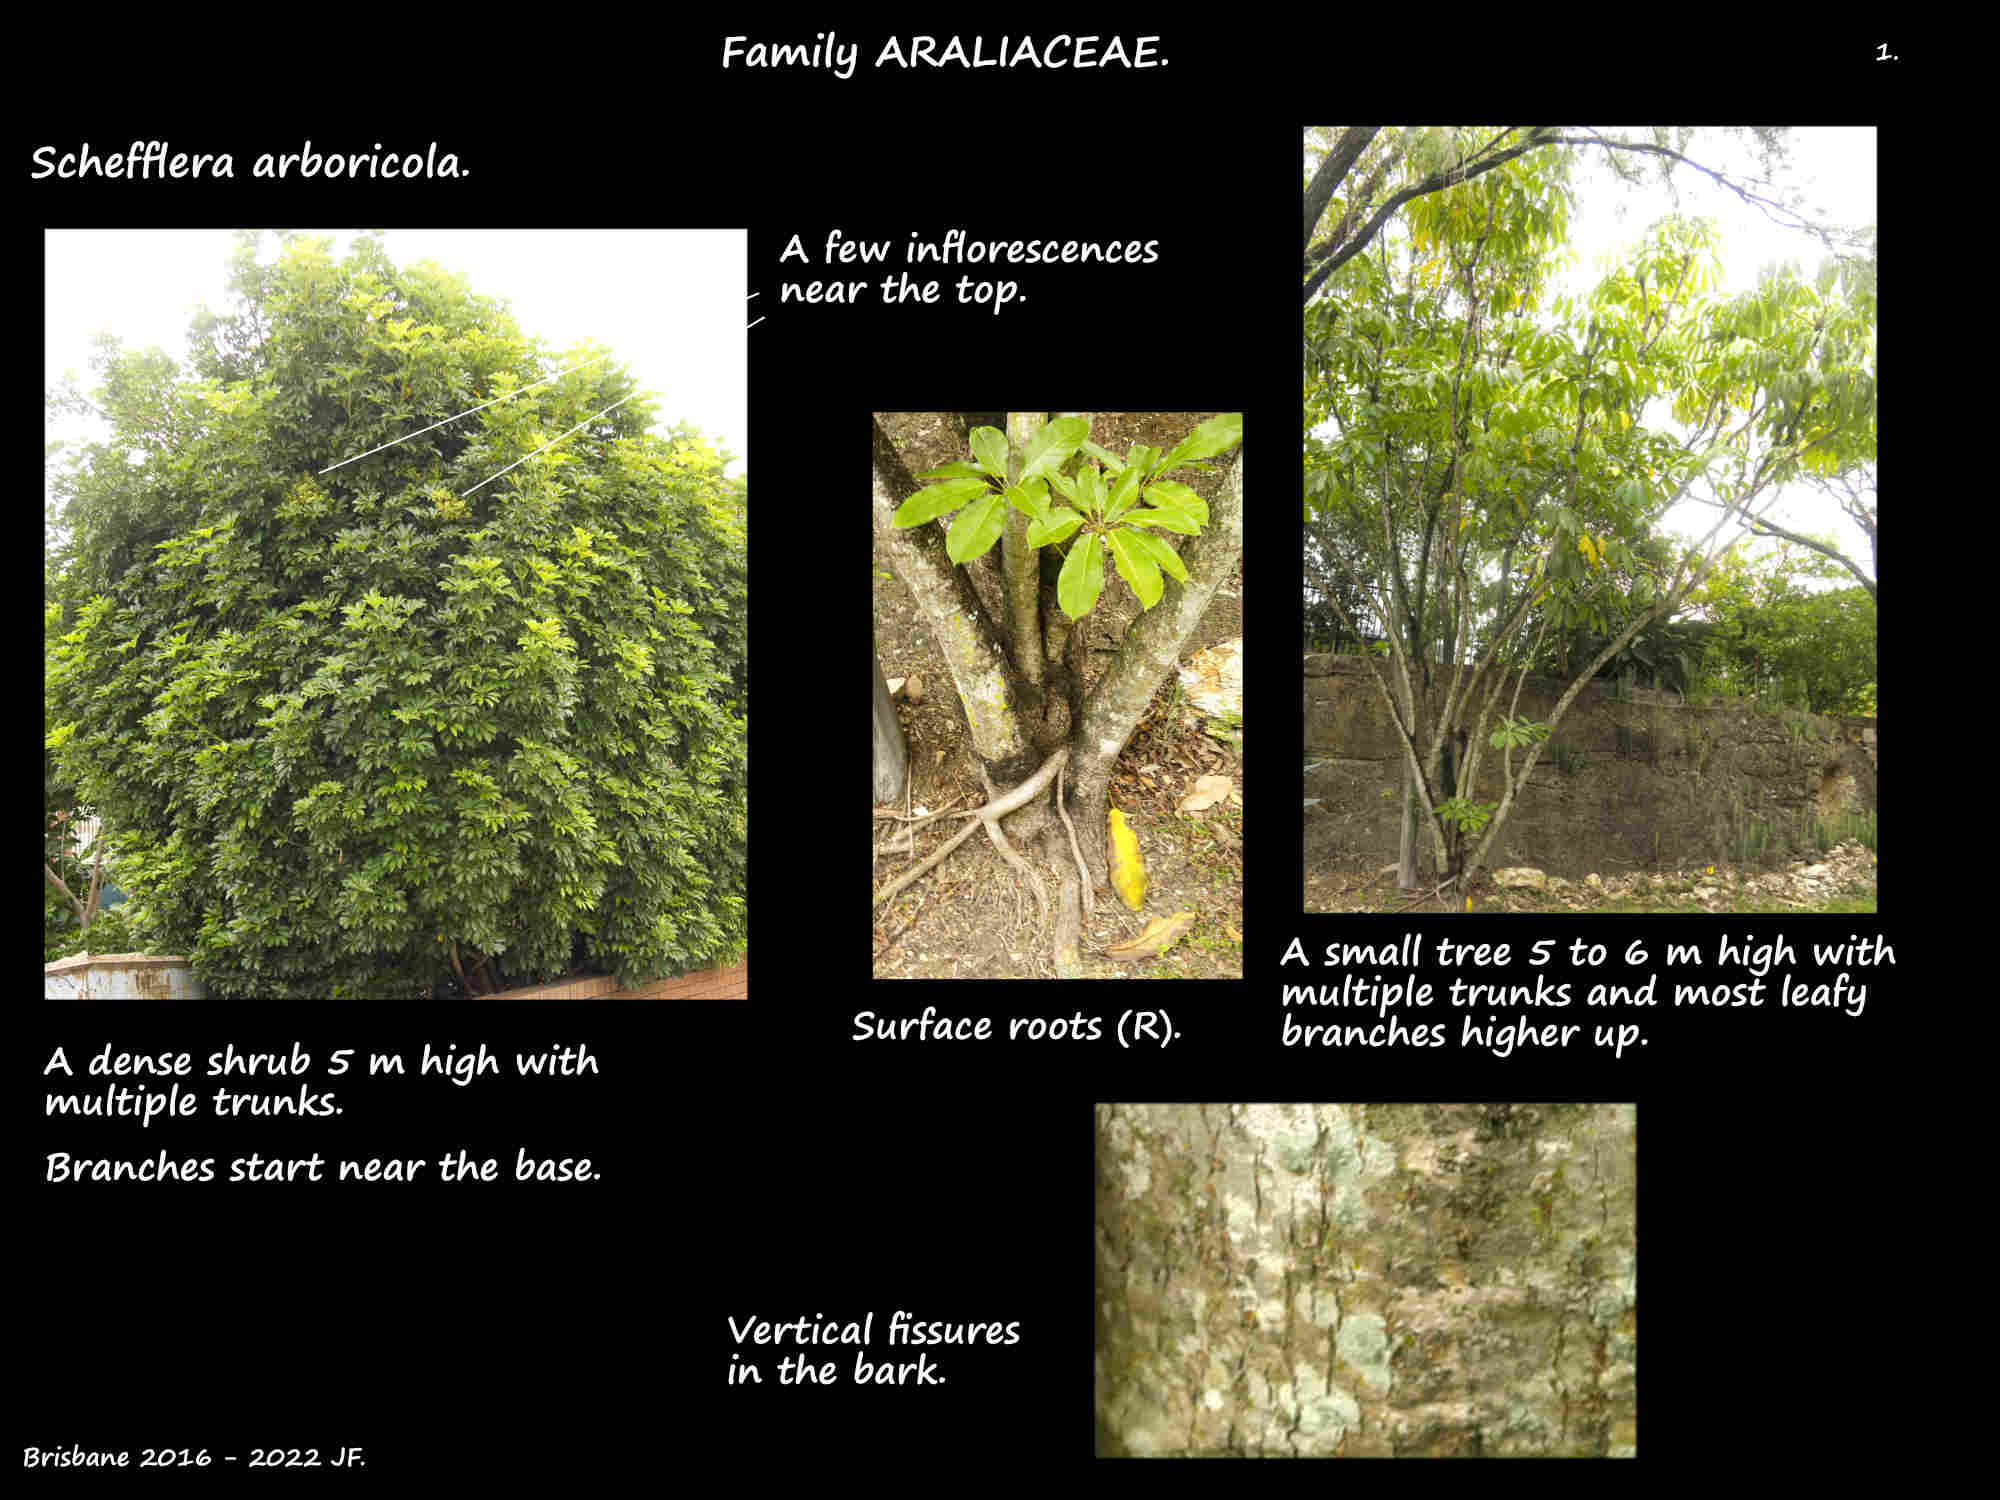 1 A Schefflera arboricola shrub & tree